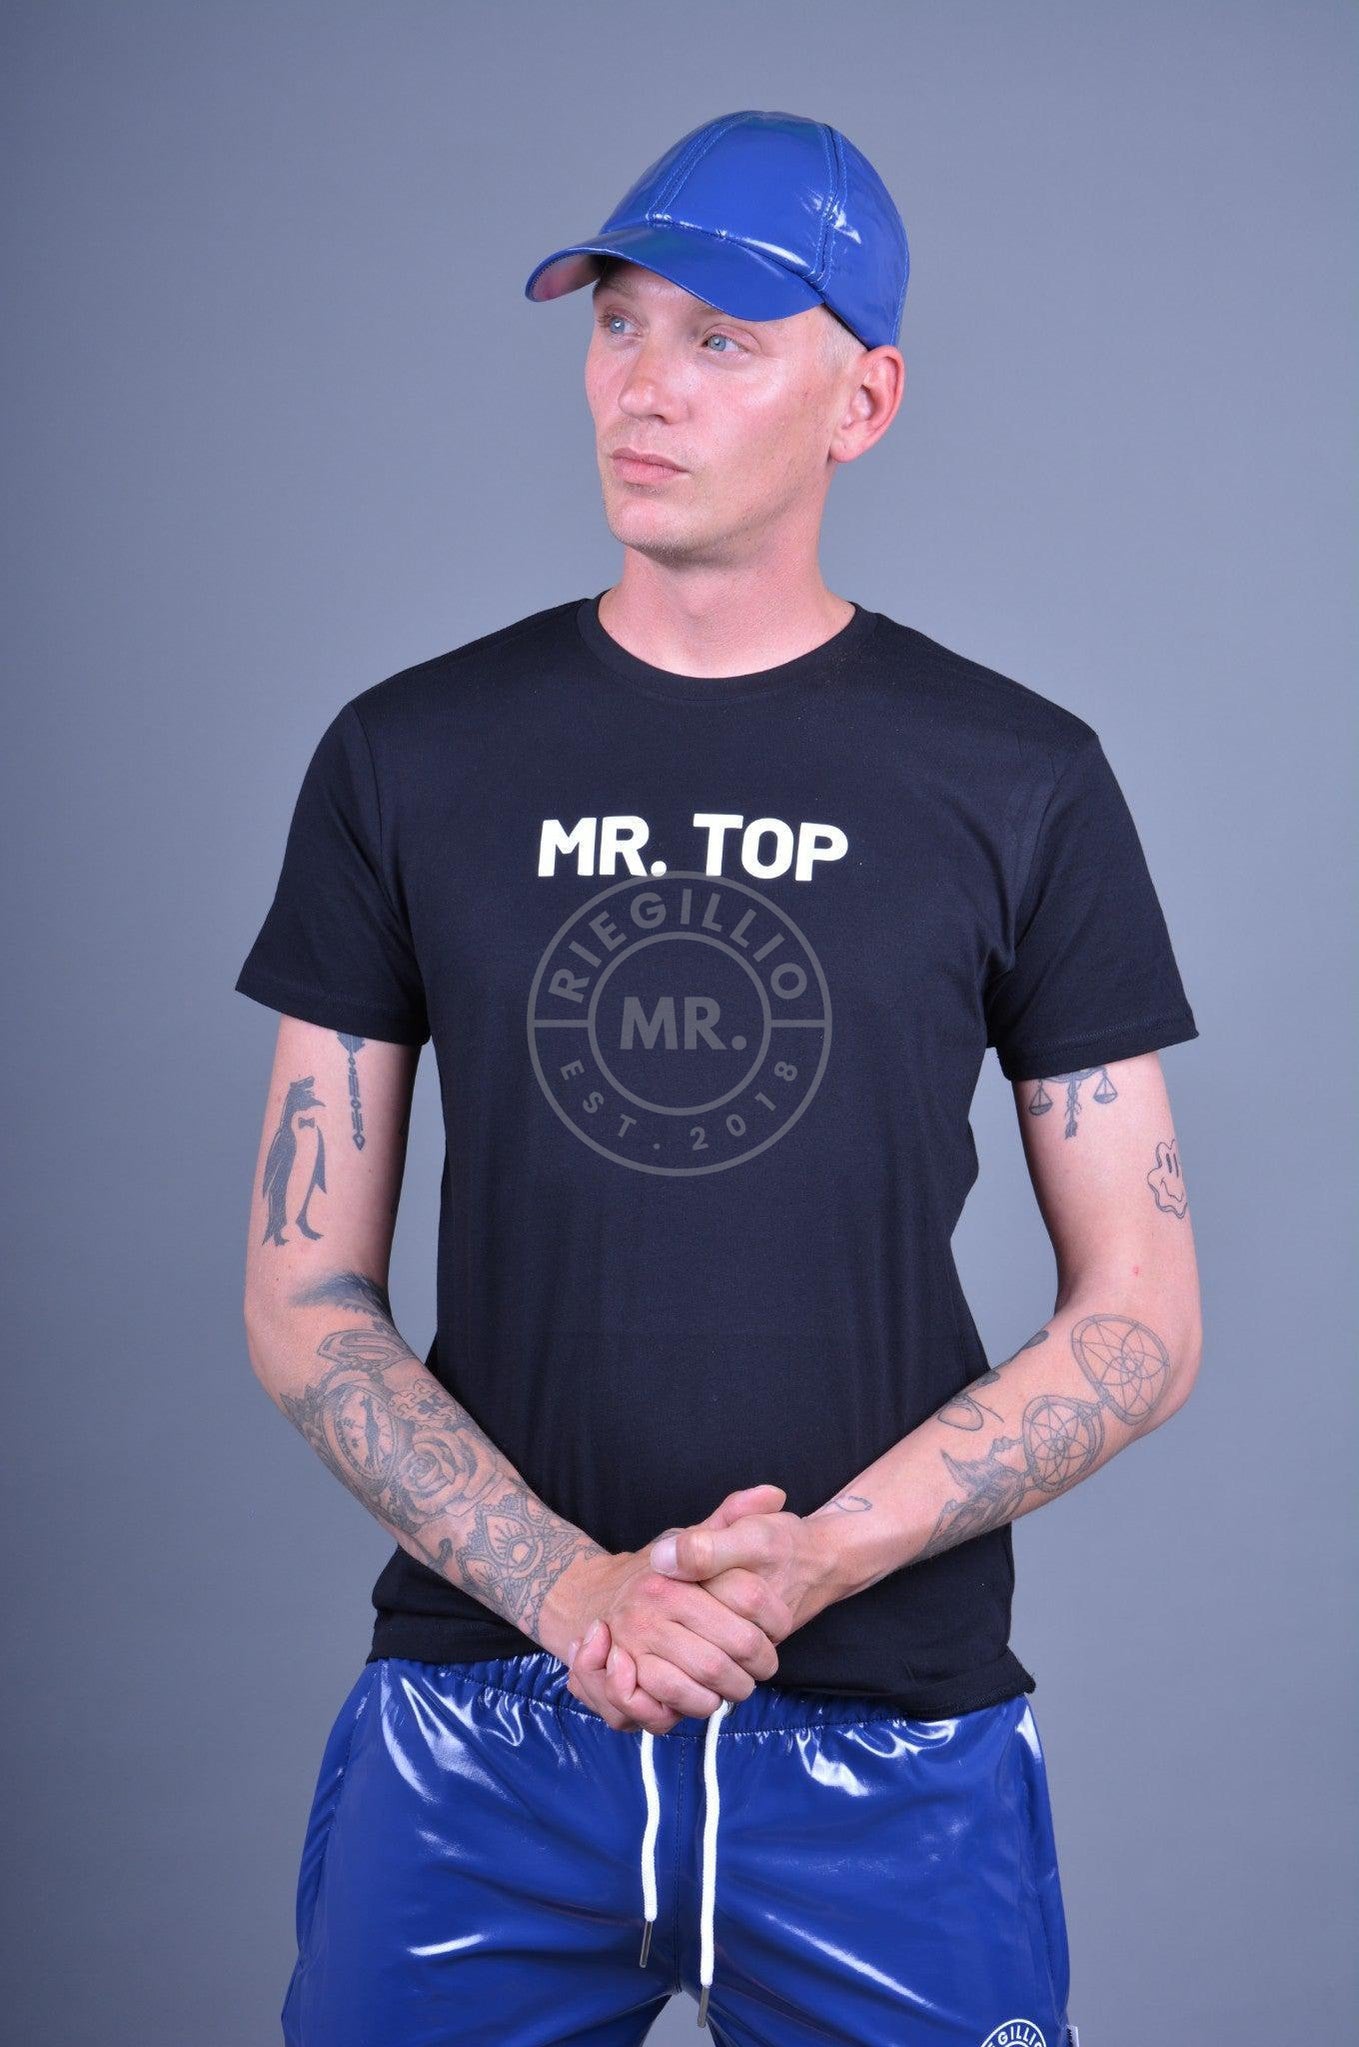 MR. TOP T-Shirt at MR. Riegillio